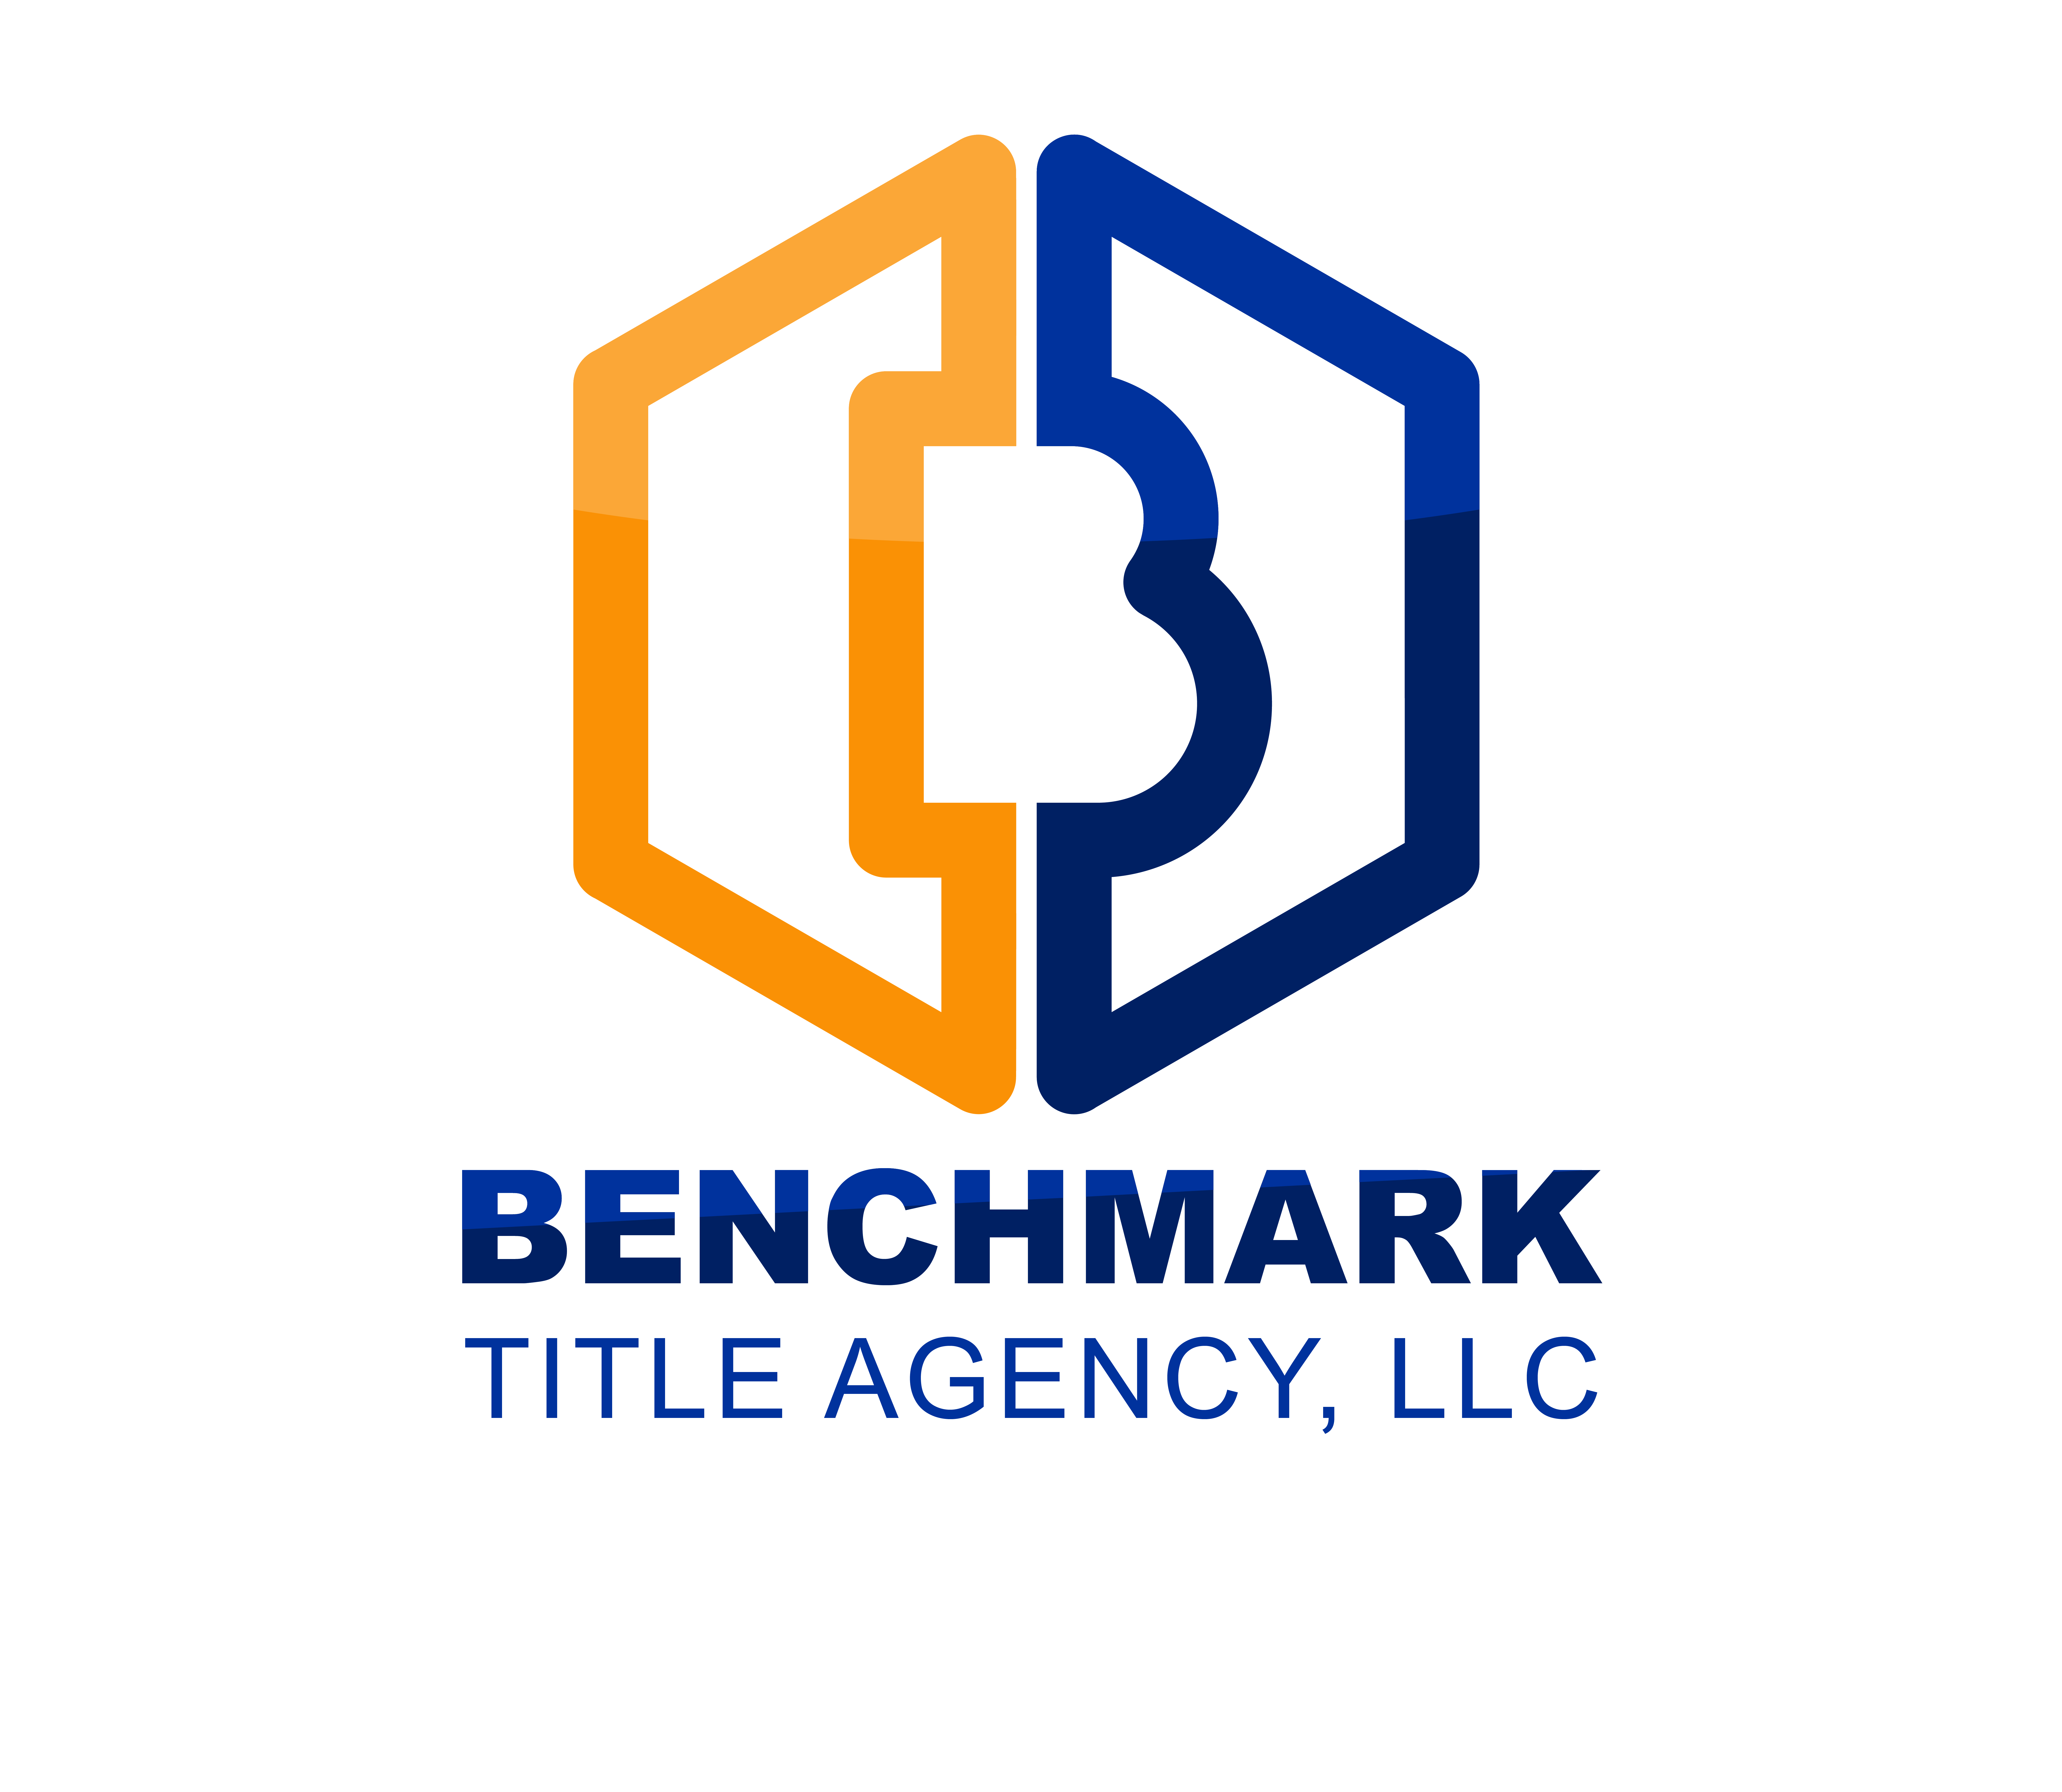 Benchmark Title Agency, LLC